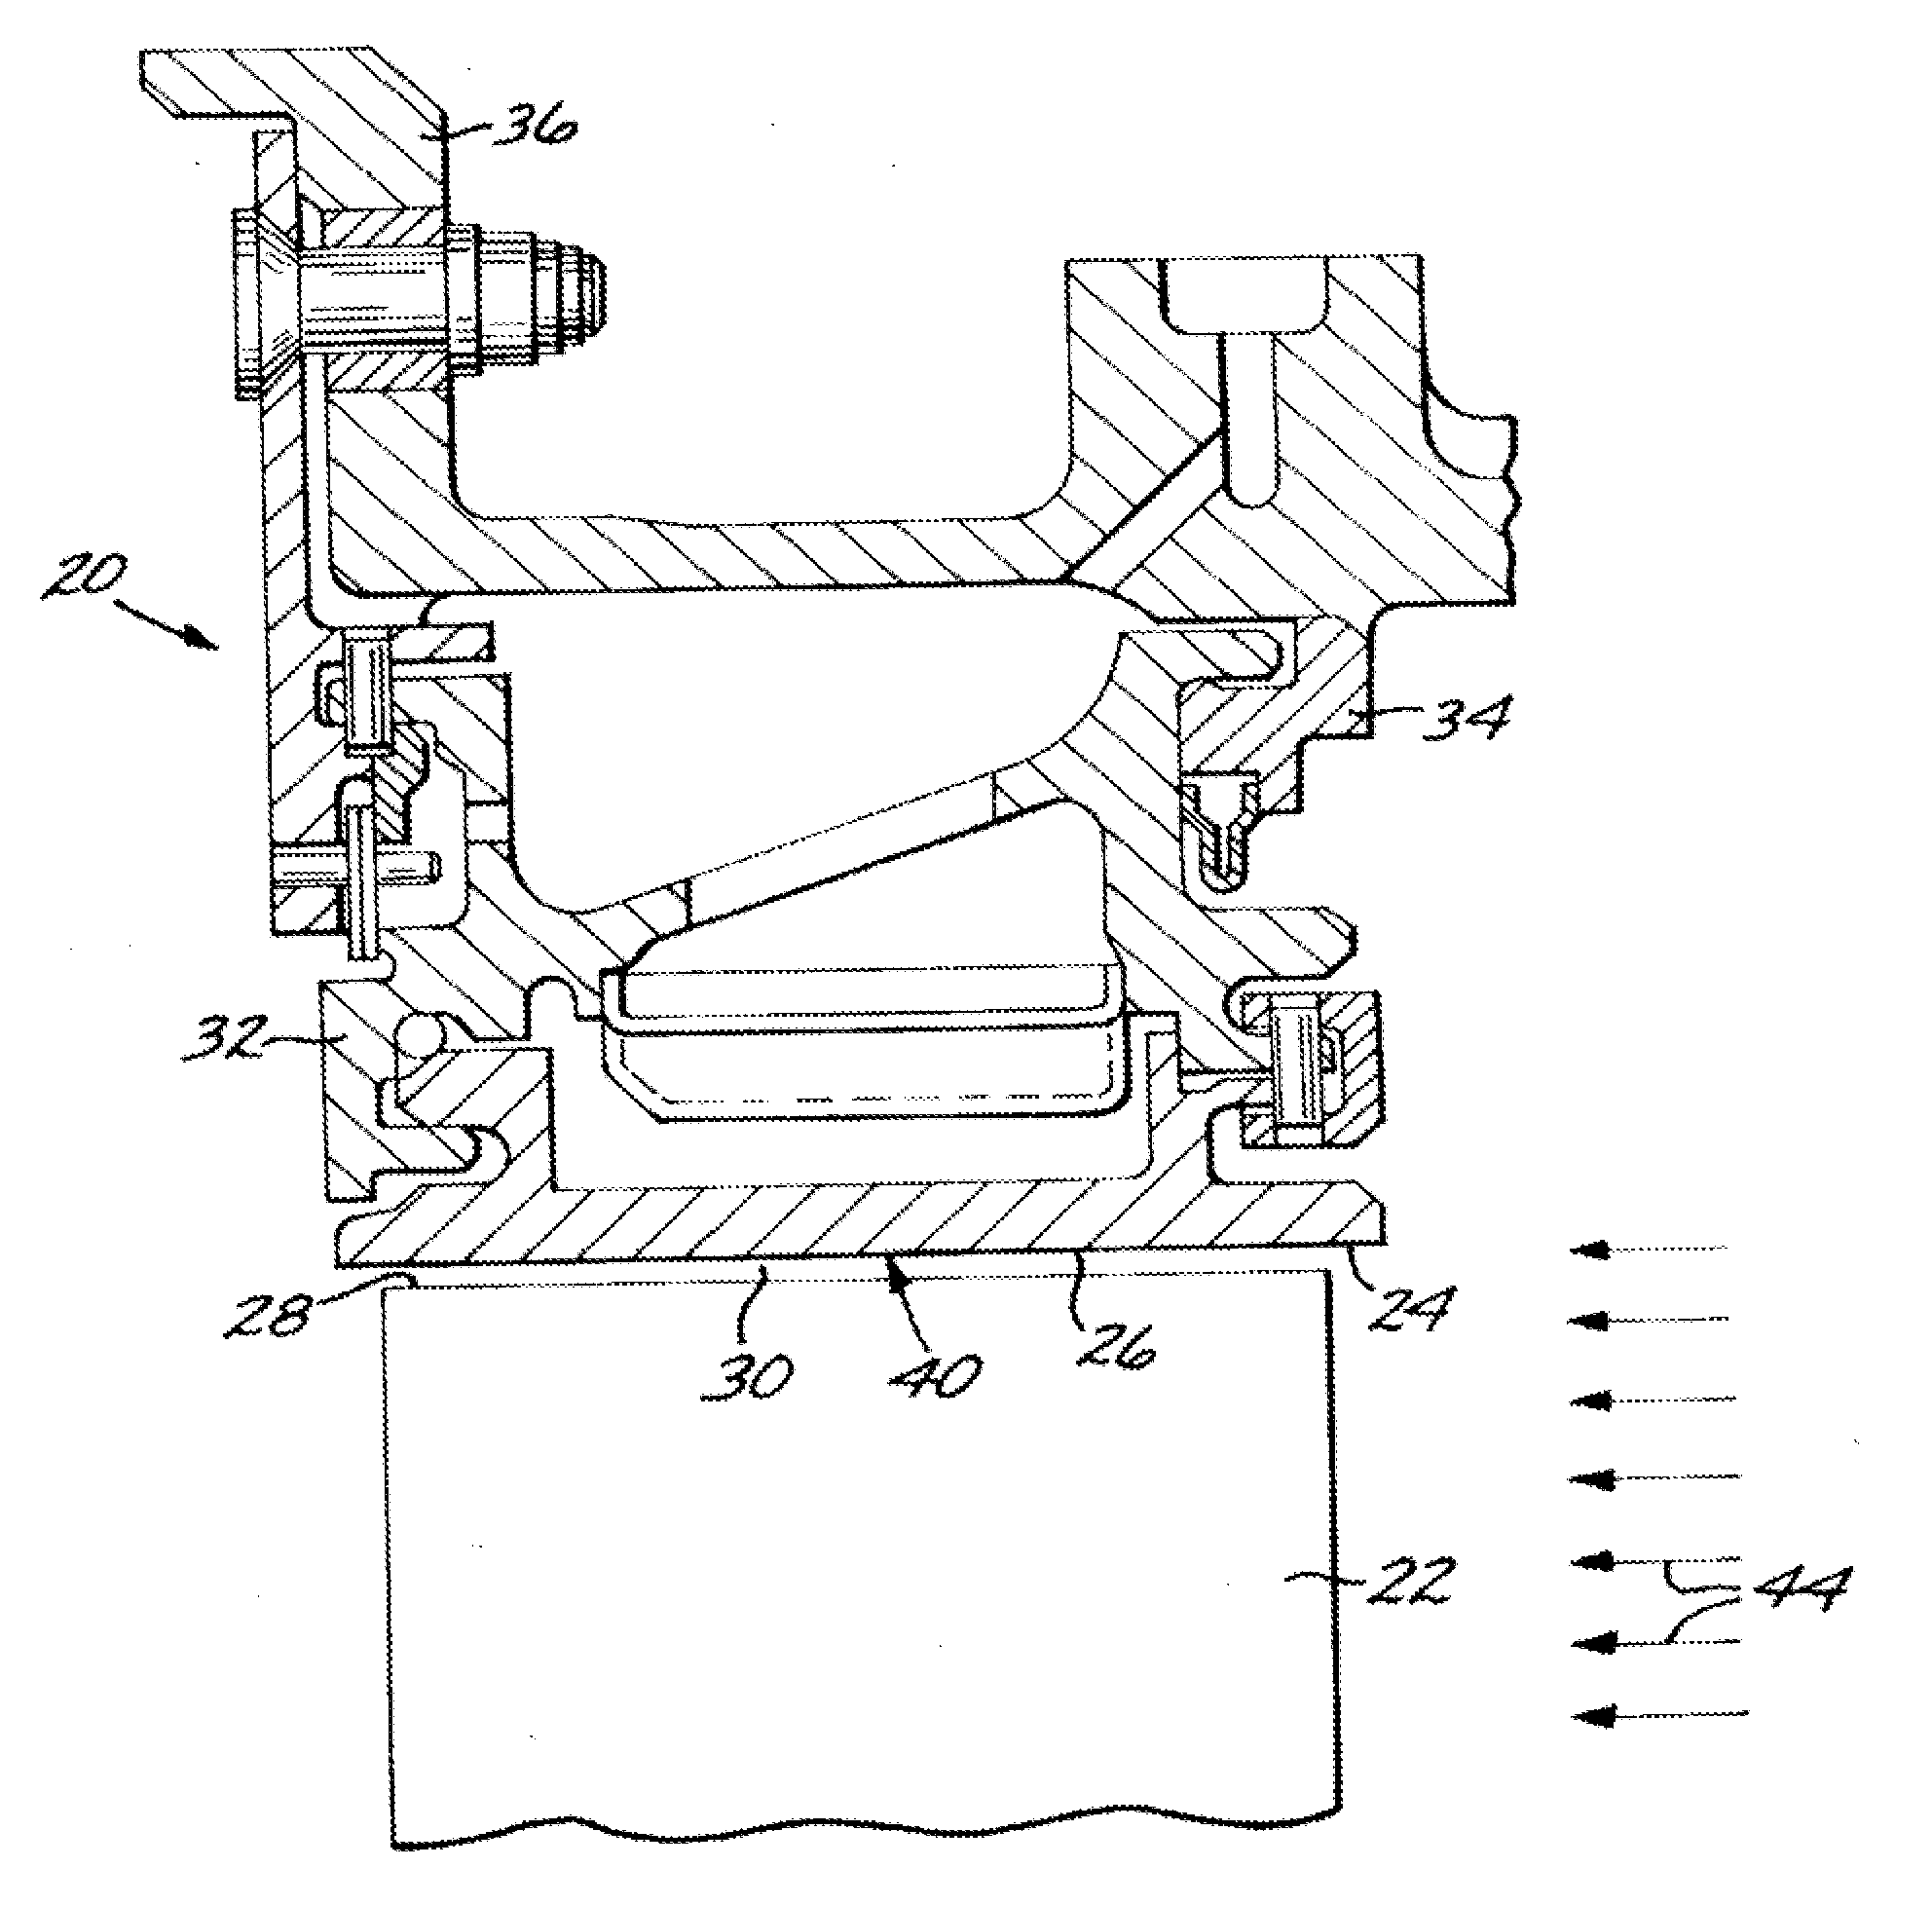 Method of repairing a stationary shroud of a gas turbine engine using laser cladding